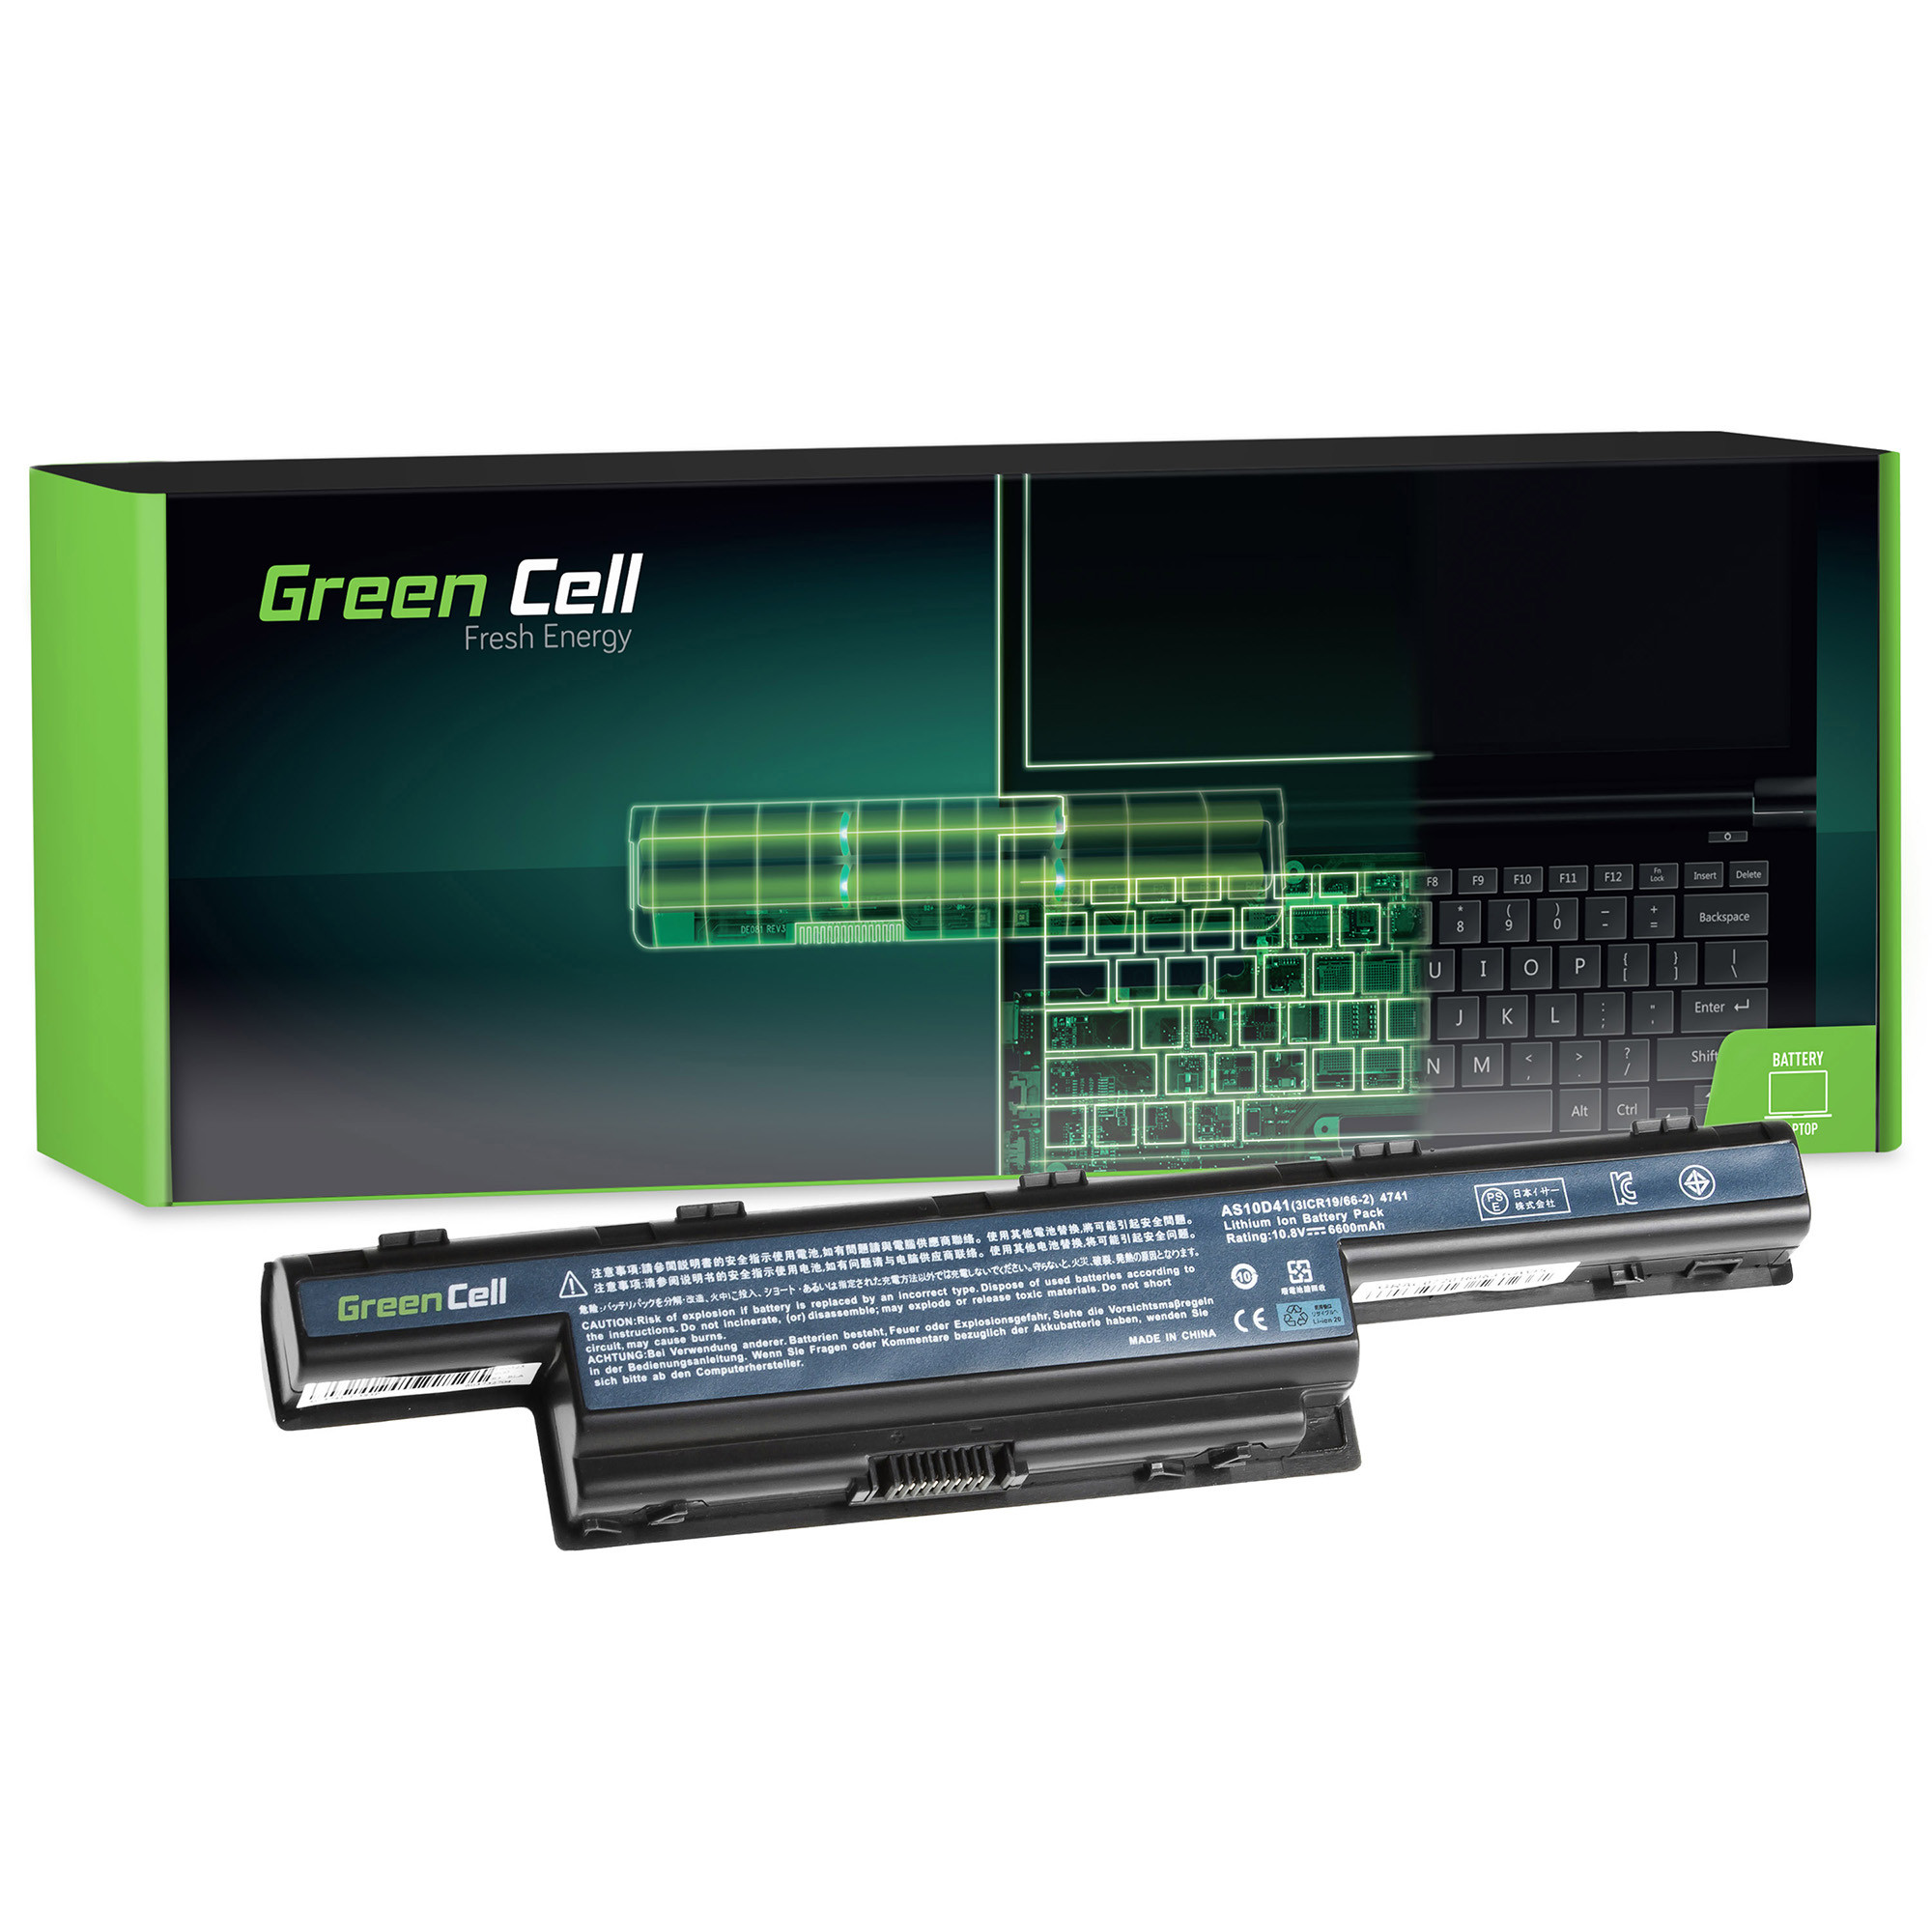 *Green Cell AC07 Baterie Acer AS10D31/AS10D3E/AS10D41/AS10D51/AS10D56/AS10D61/AS10D71 6600 mAh Li-ion - neoriginální